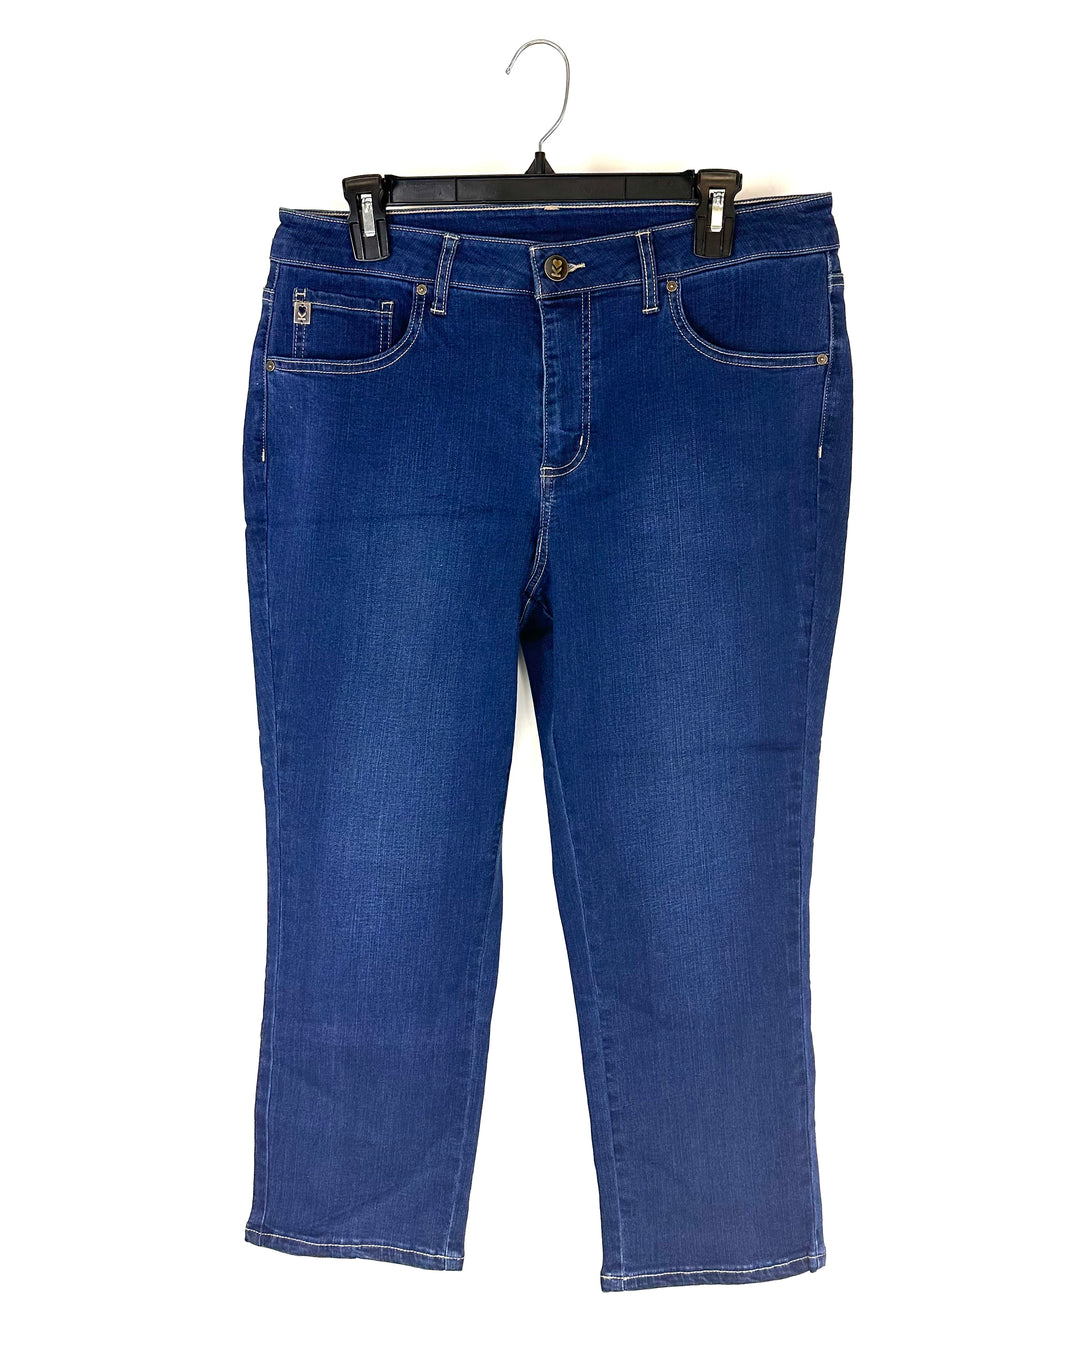 Dark Denim Cropped Jeans - Size 12/14